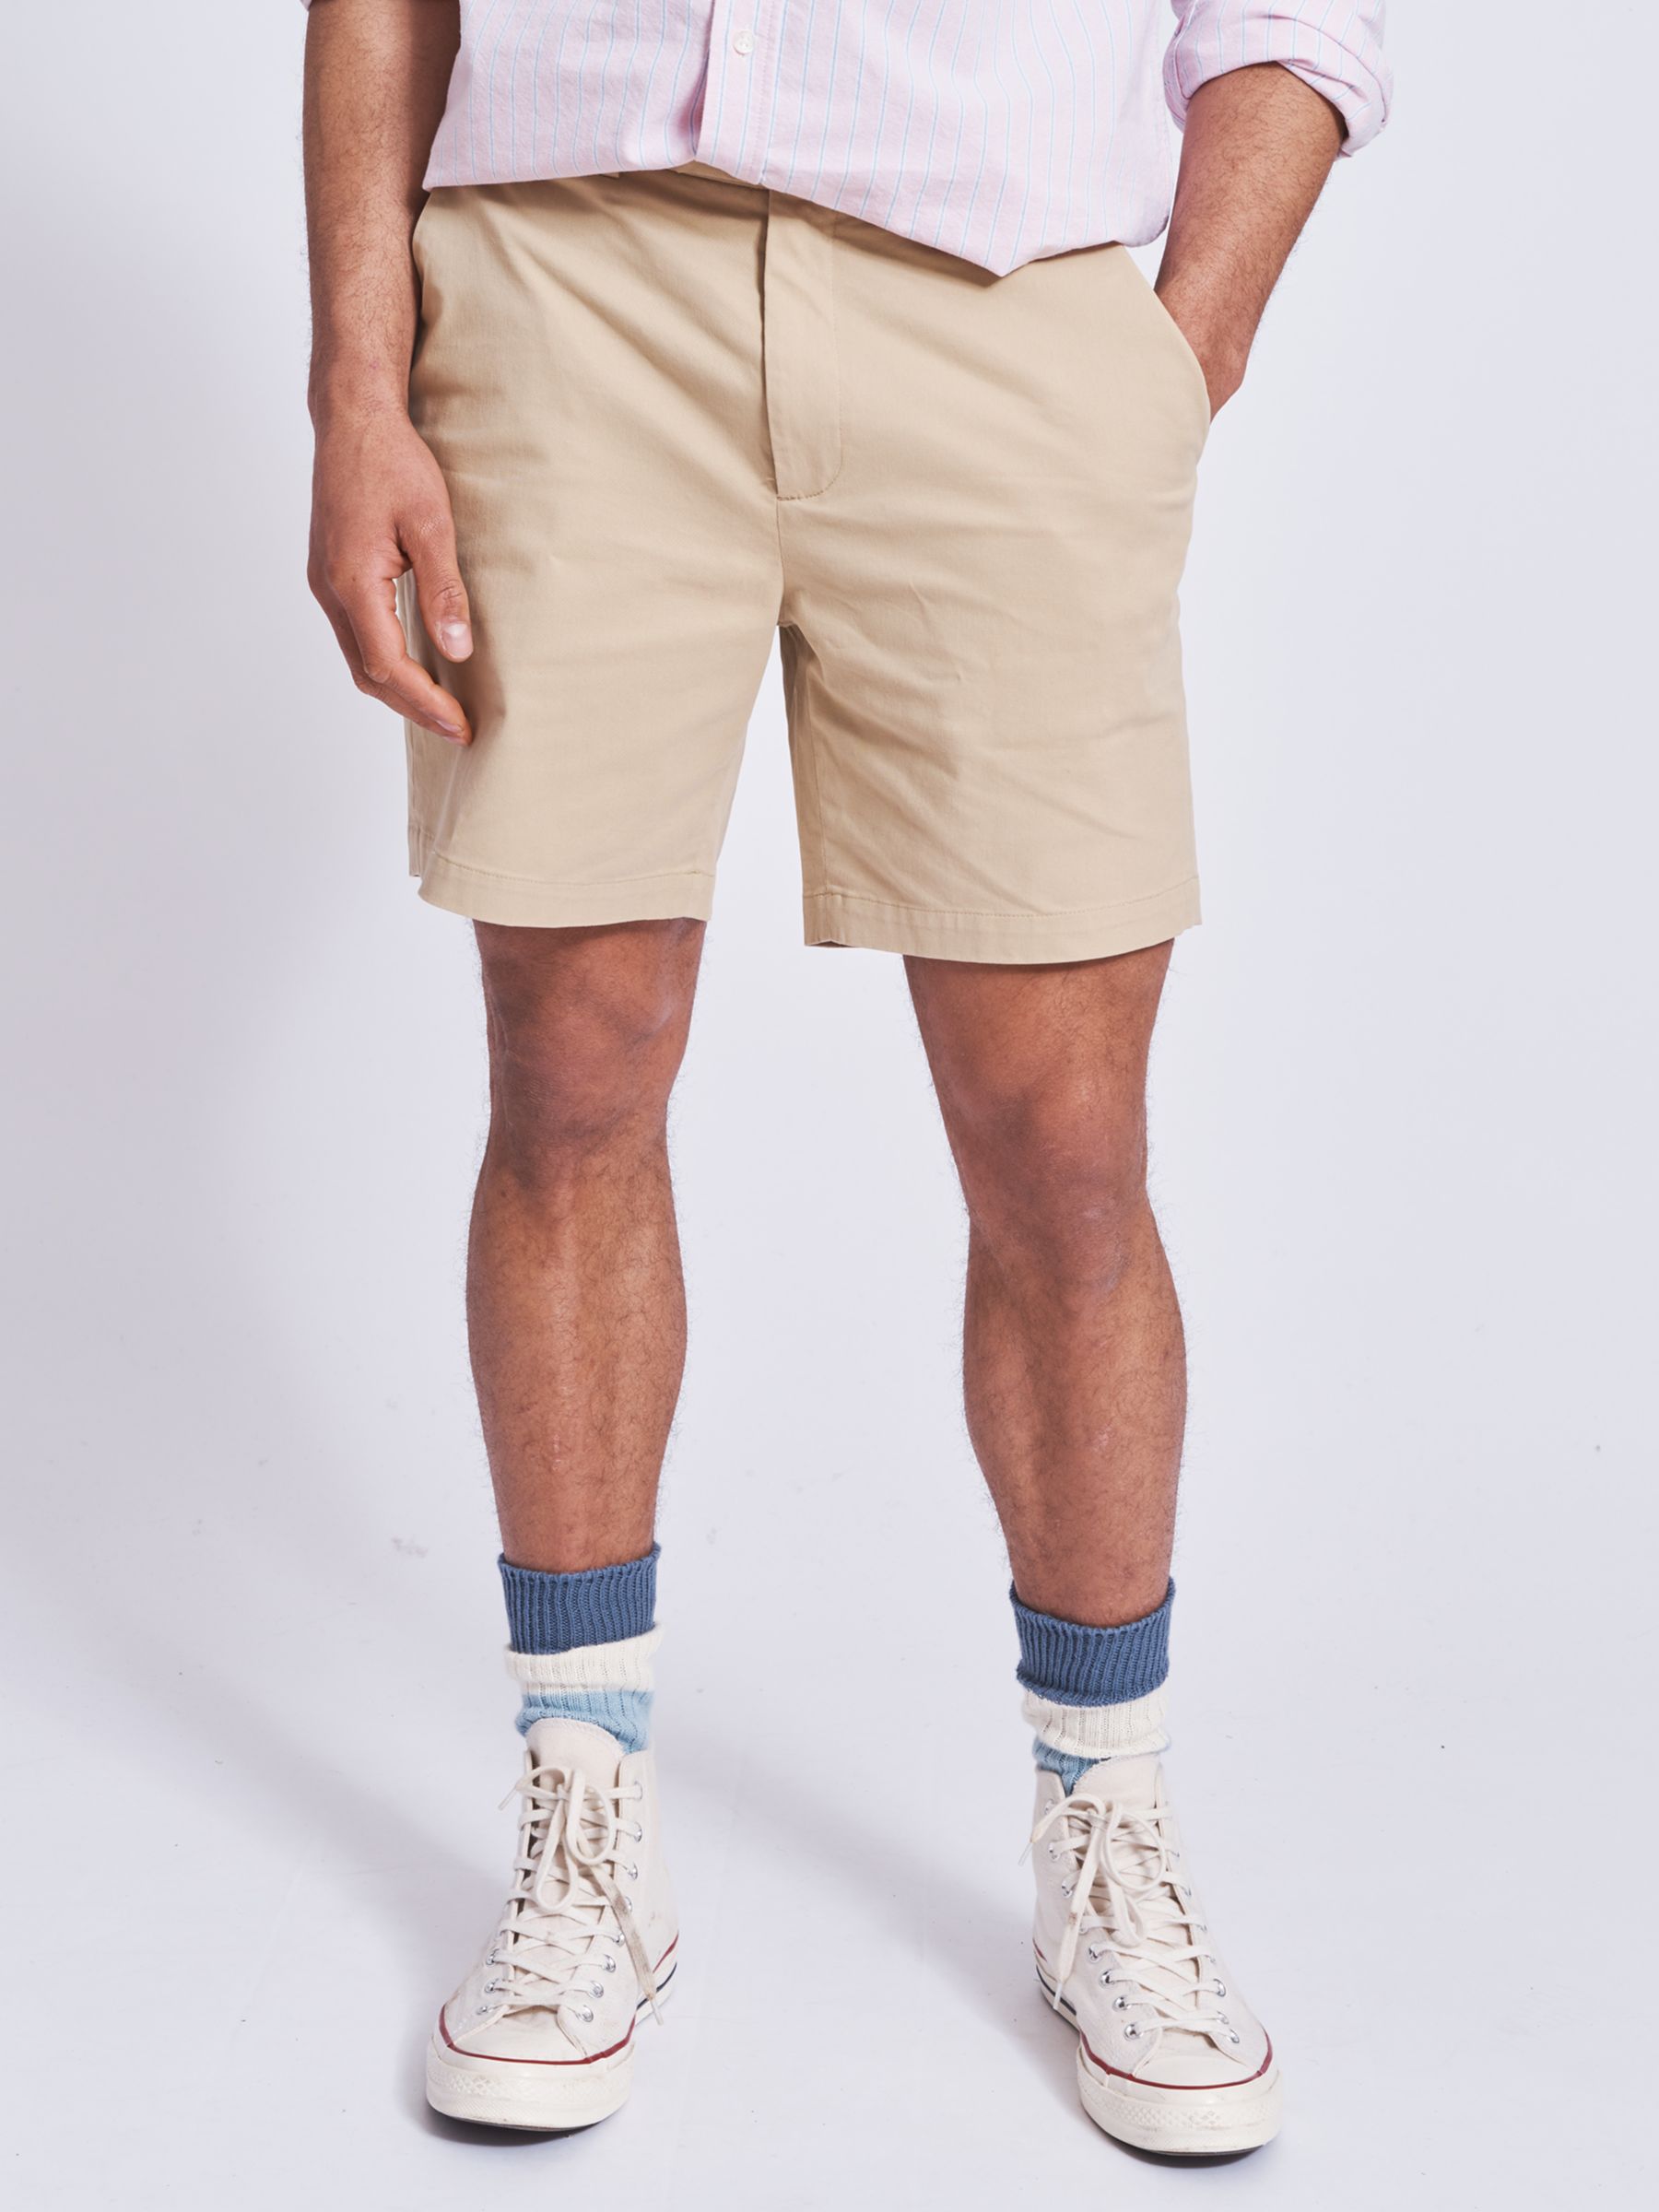 Aubin Stirtloe Chino Shorts, Sand, 30R